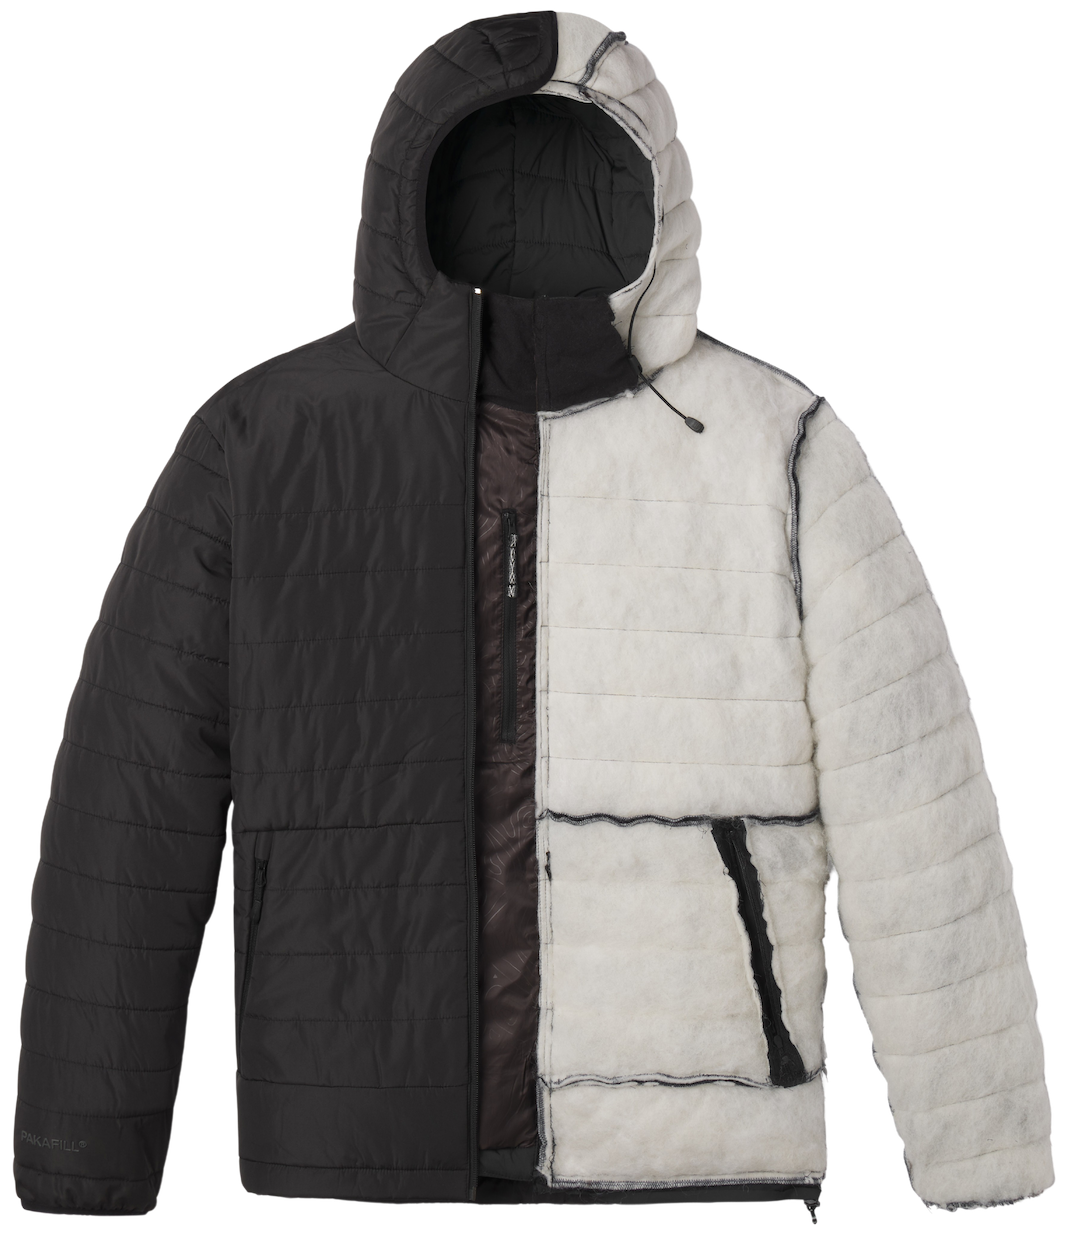 Cozy outdoor winter jacket showing half with exterior and half interior insulation